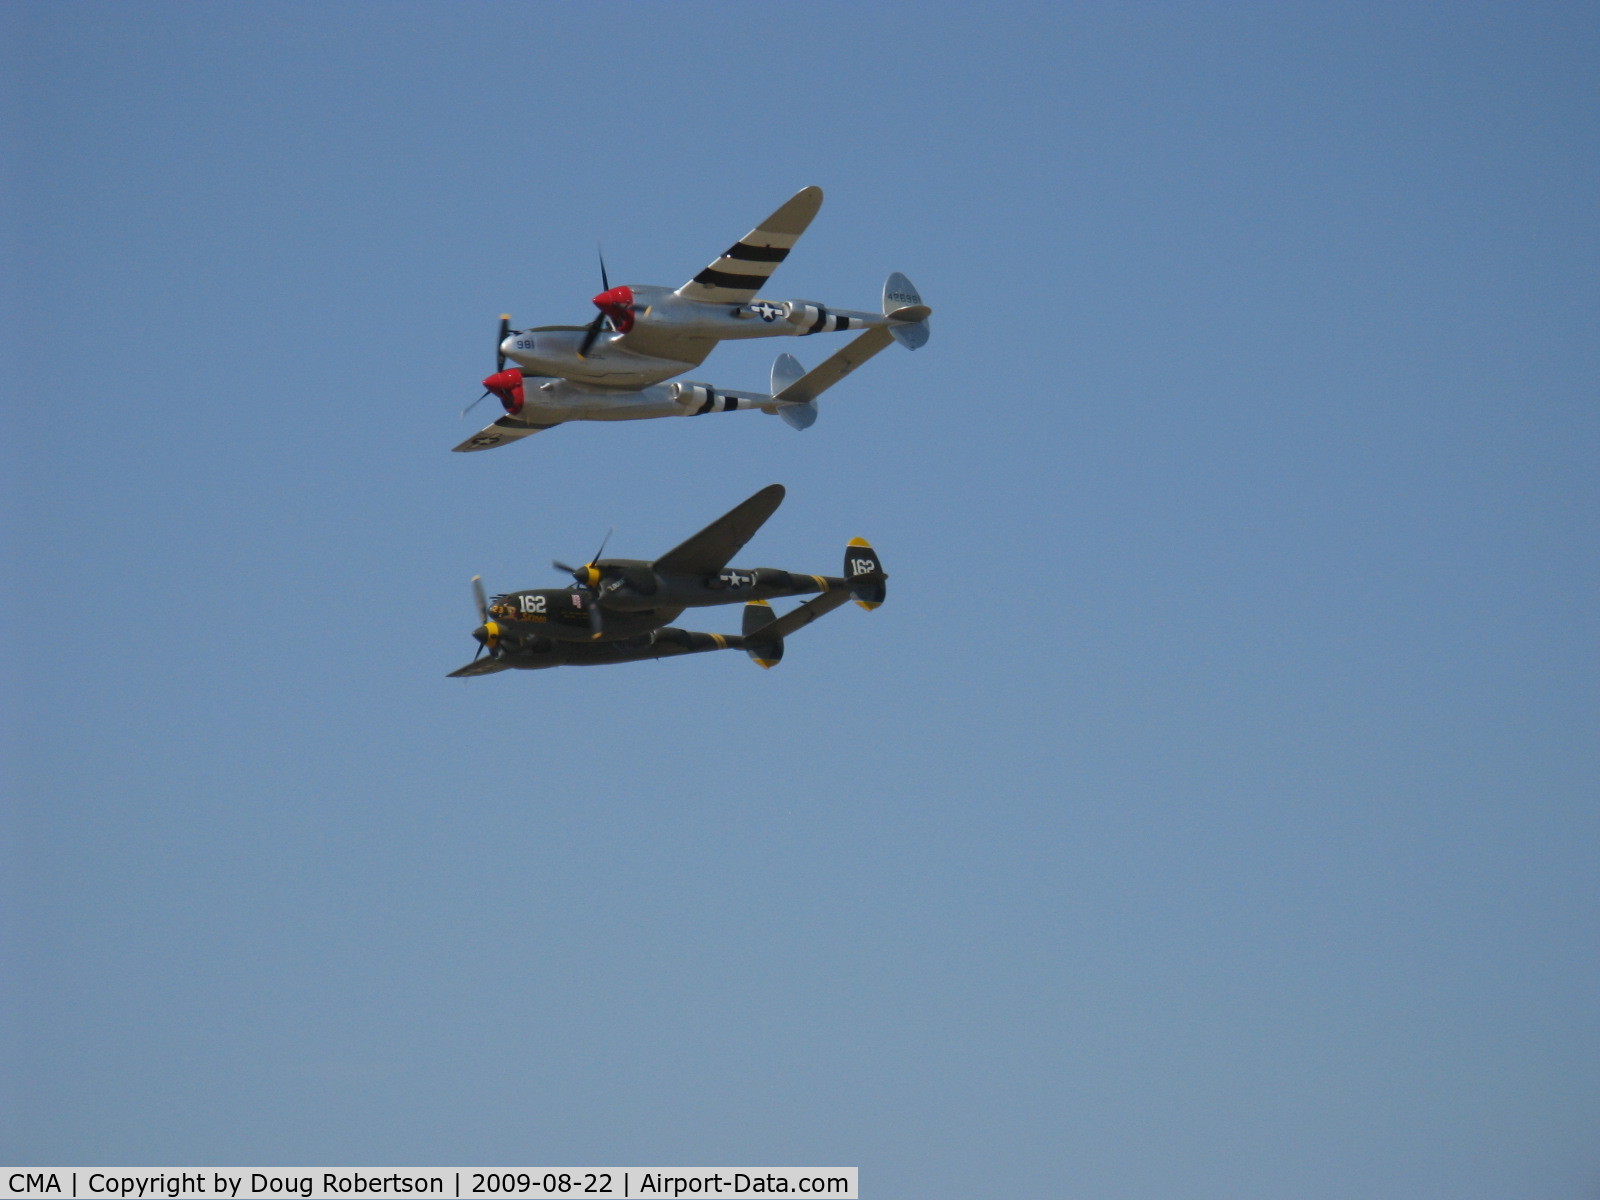 Camarillo Airport (CMA) - 'Wings Over Camarillo' Airshow 2009-two Lockheed Lightning P-38s-NL7723C and NX138AM '23 Skidoo'